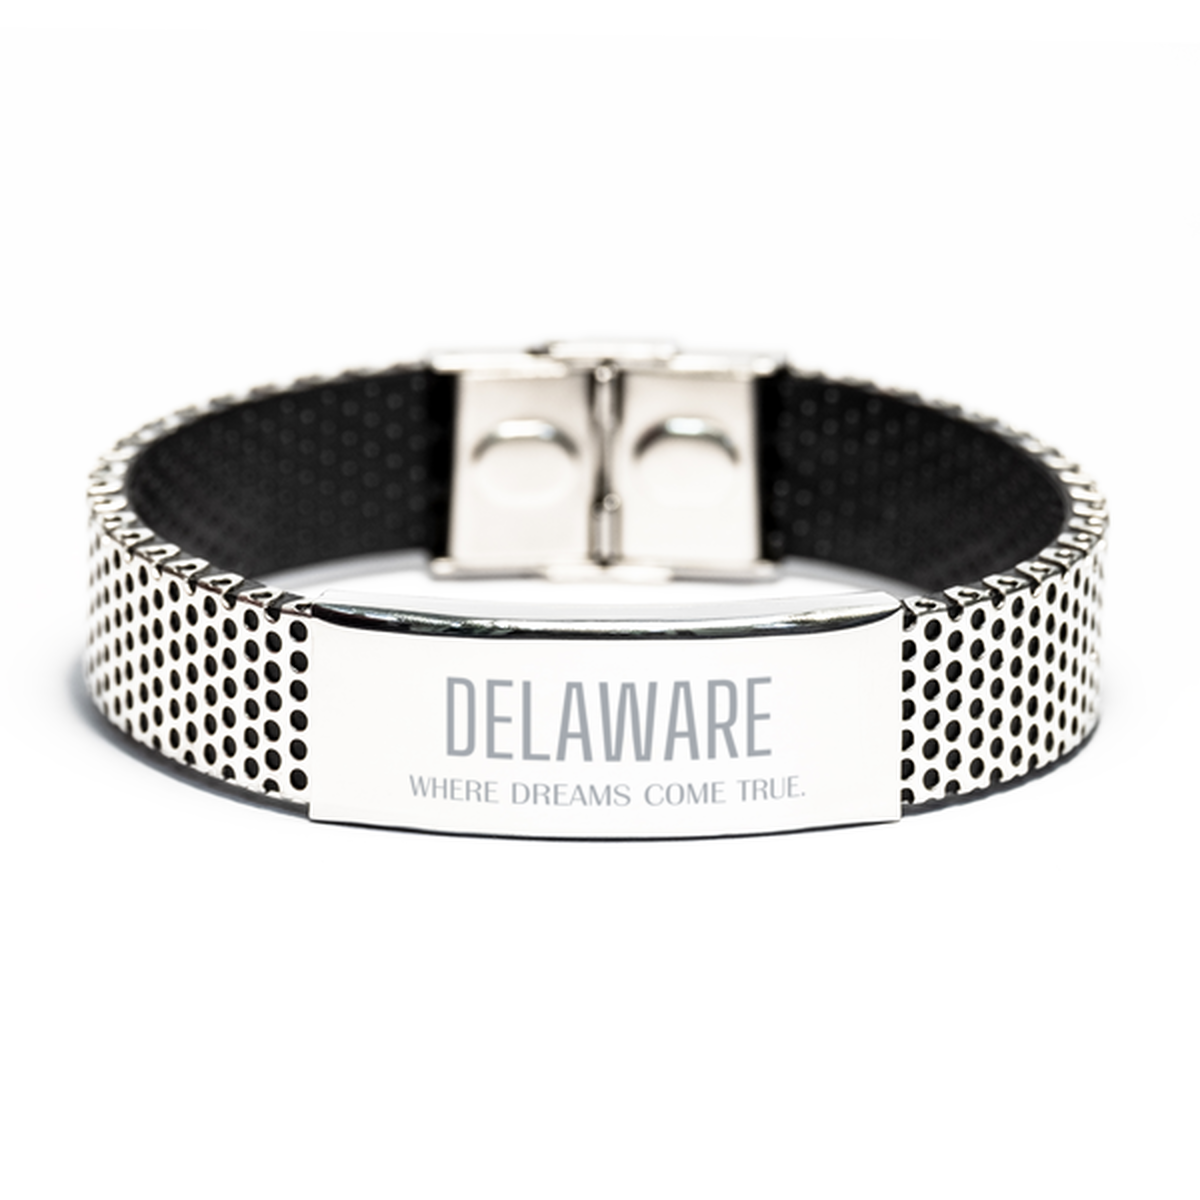 Love Delaware State Stainless Steel Bracelet, Delaware Where dreams come true, Birthday Inspirational Gifts For Delaware Men, Women, Friends